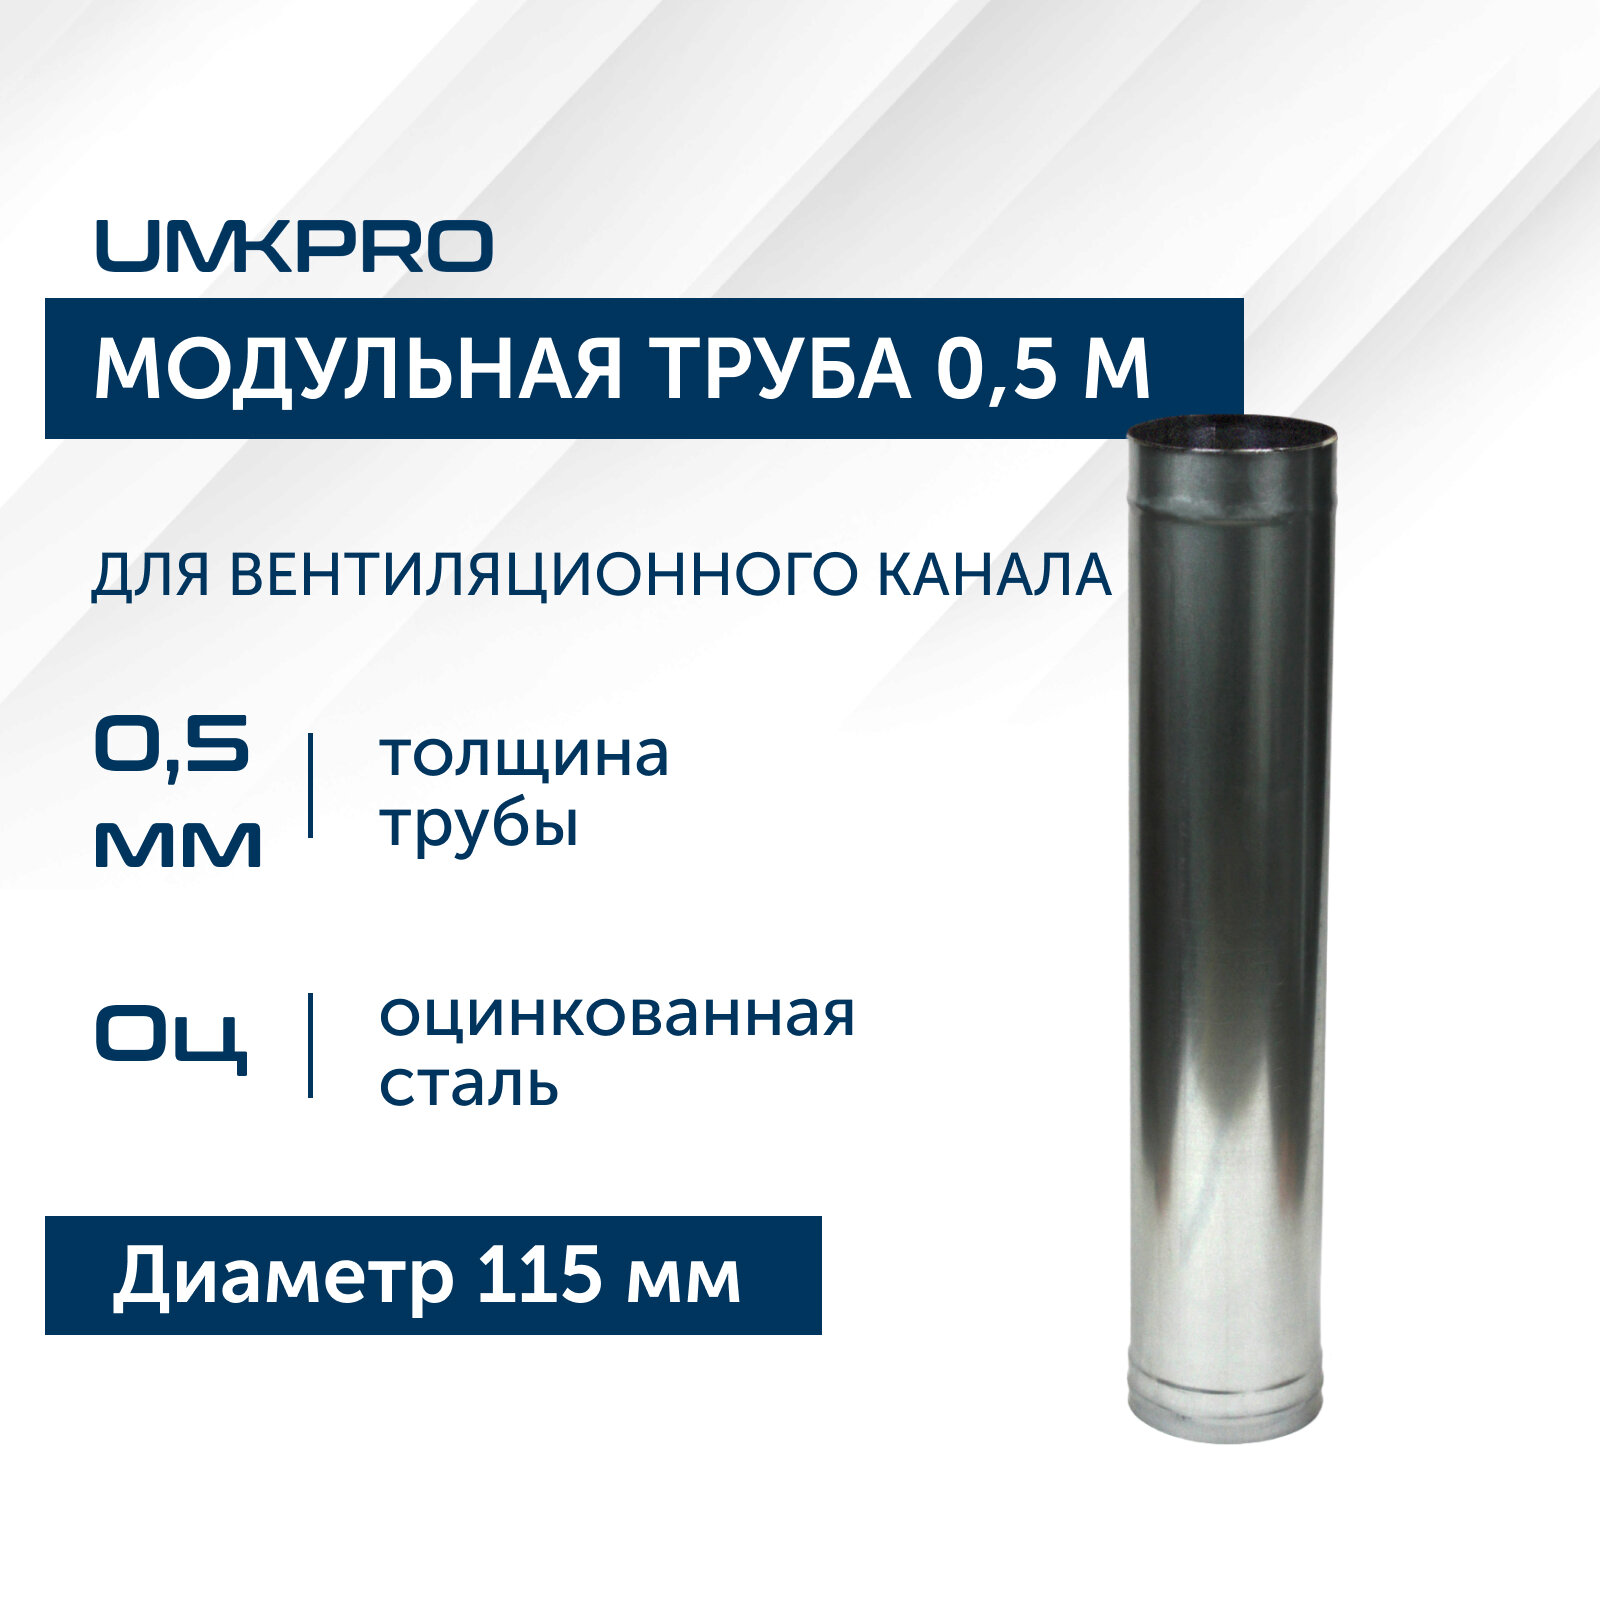 Труба модульная для дымохода 05 м UMKPRO D 100 Оц/05мм